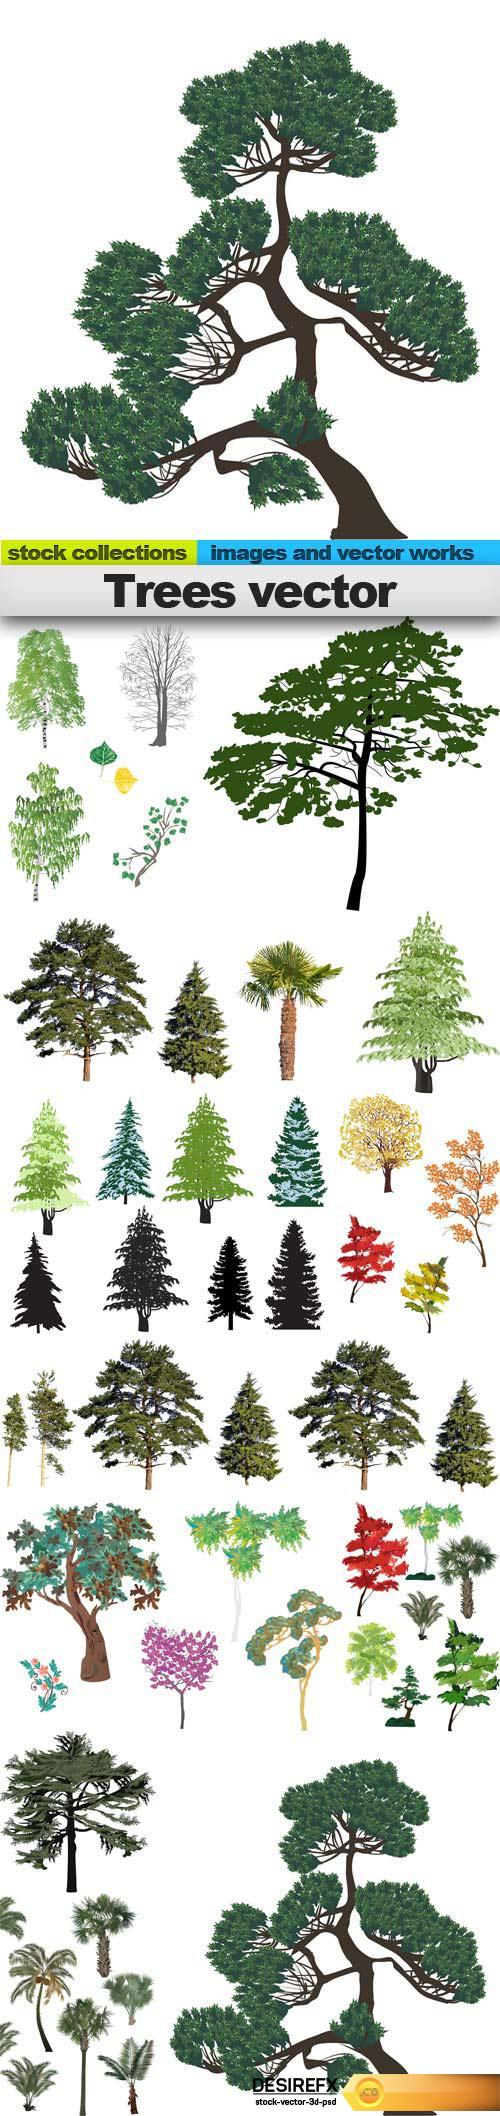 Trees vector, 15 x EPS